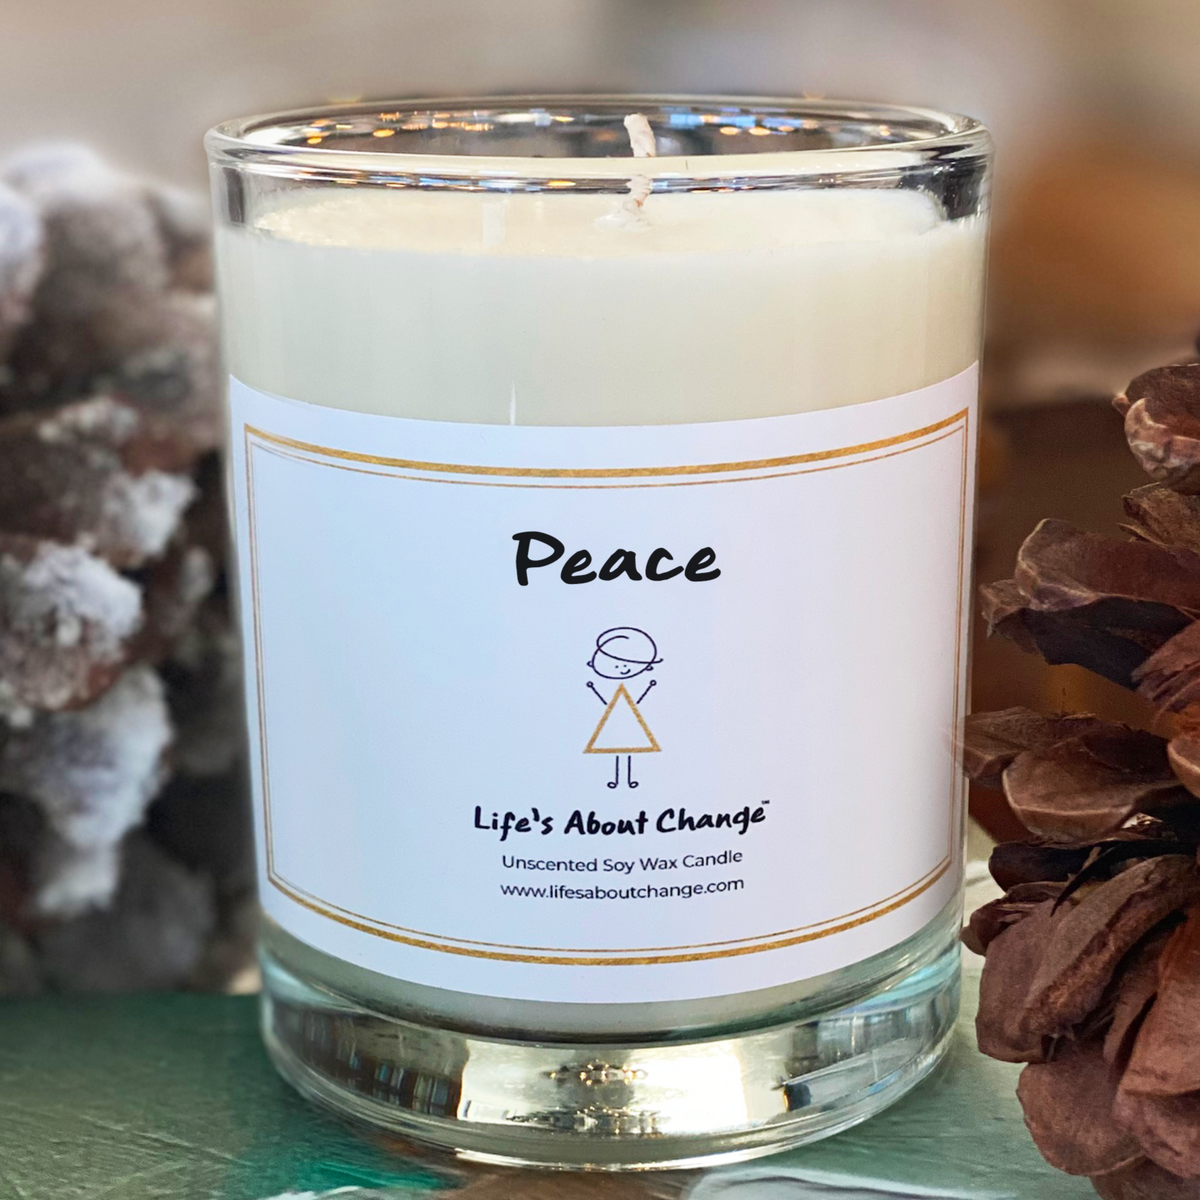 Peace Candle – Peaceful Pickings